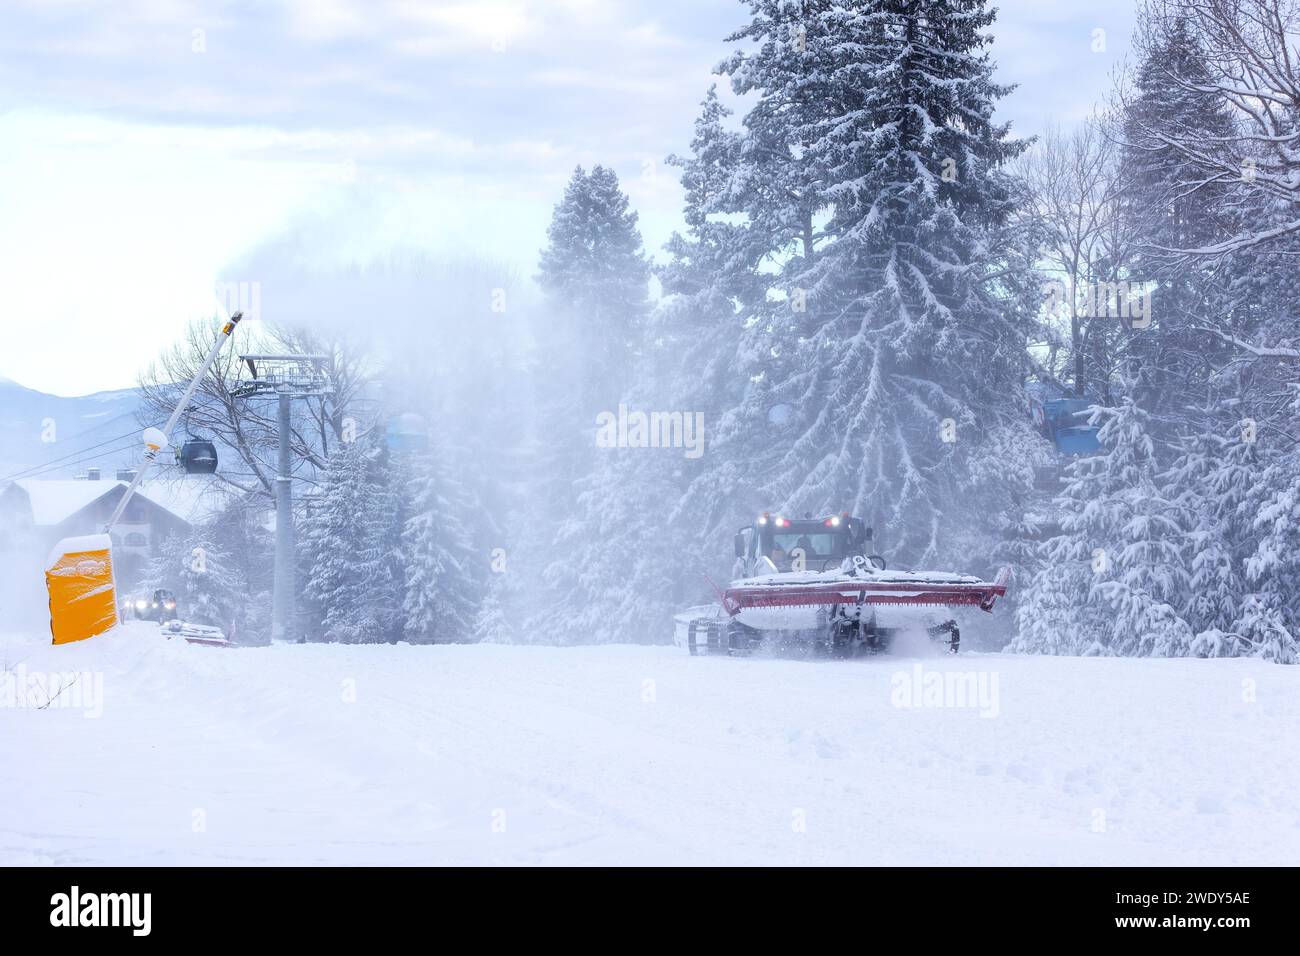 Snow groomer snowcat ratrack machine preparing ski road slope for alpine skiing, winter resort Bansko, Bulgaria Stock Photo